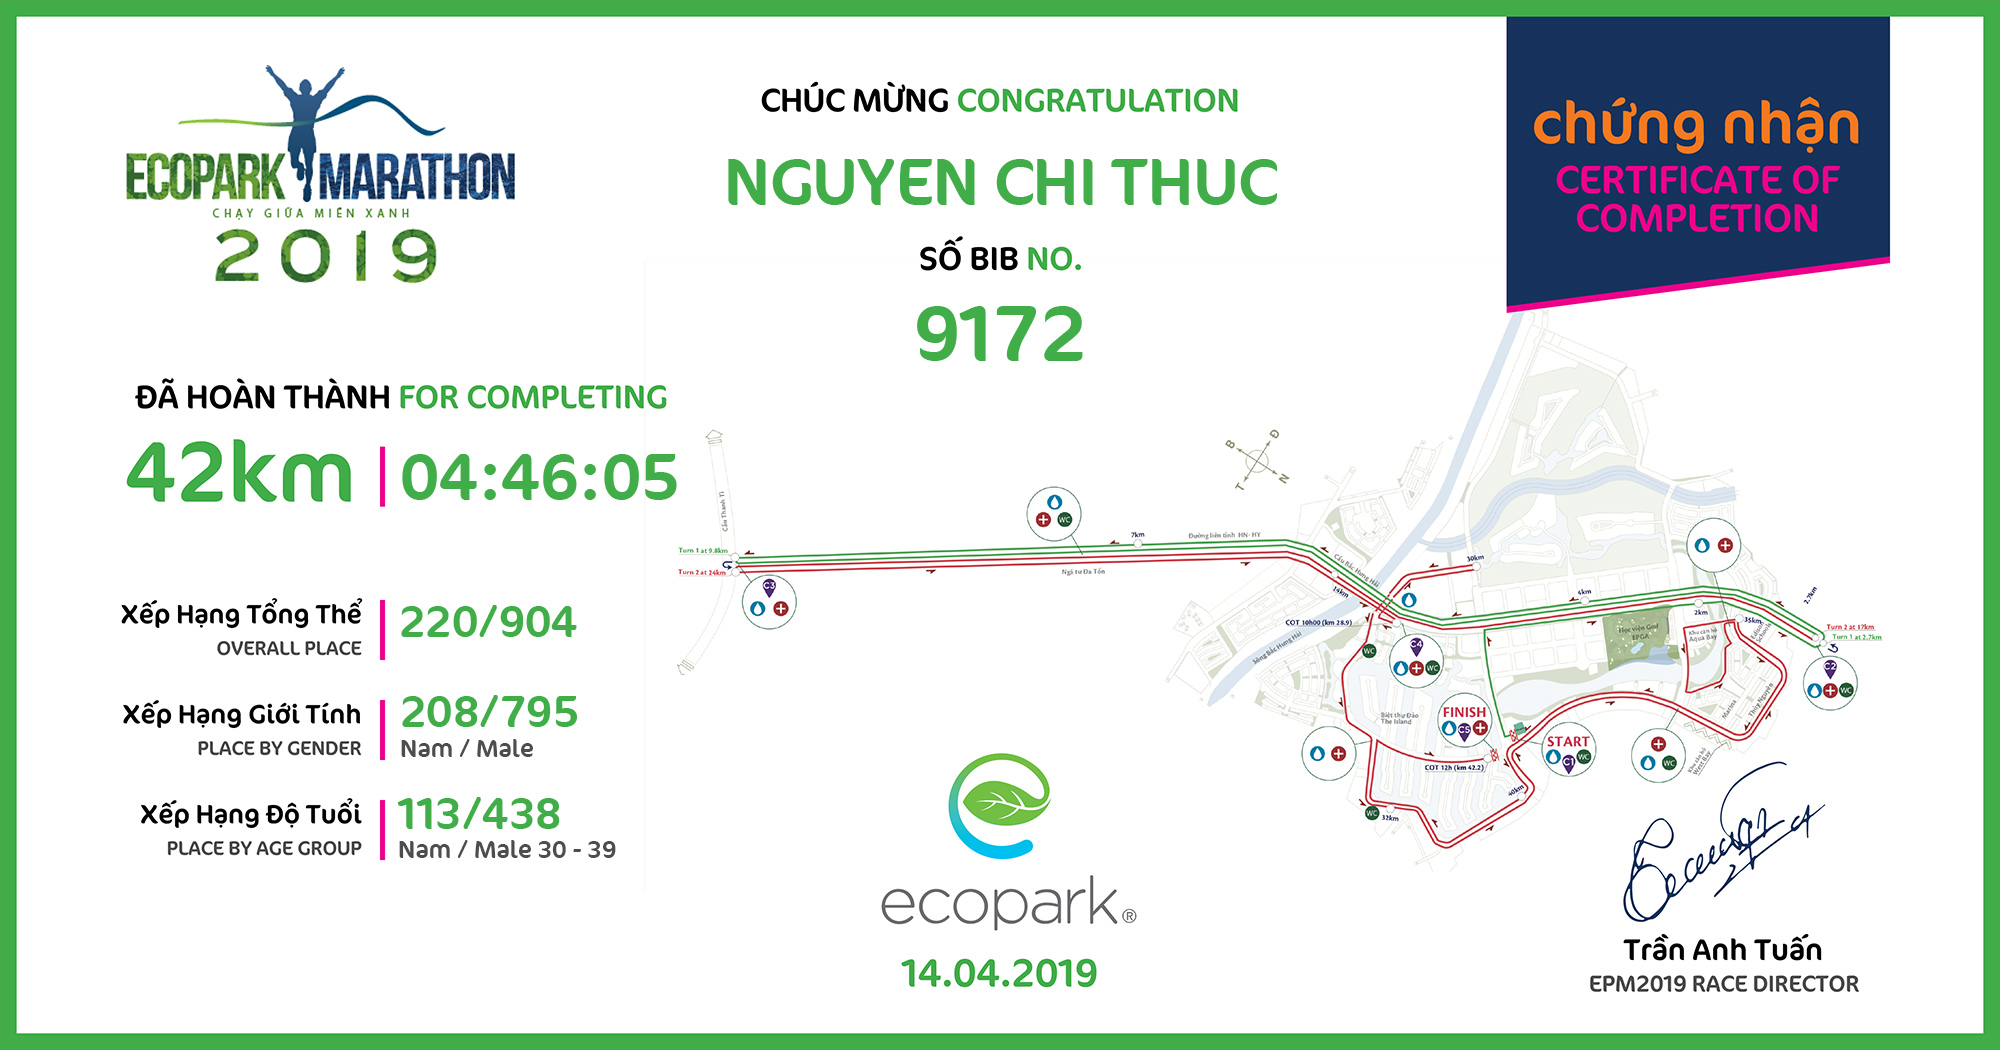 9172 - Nguyen Chi Thuc